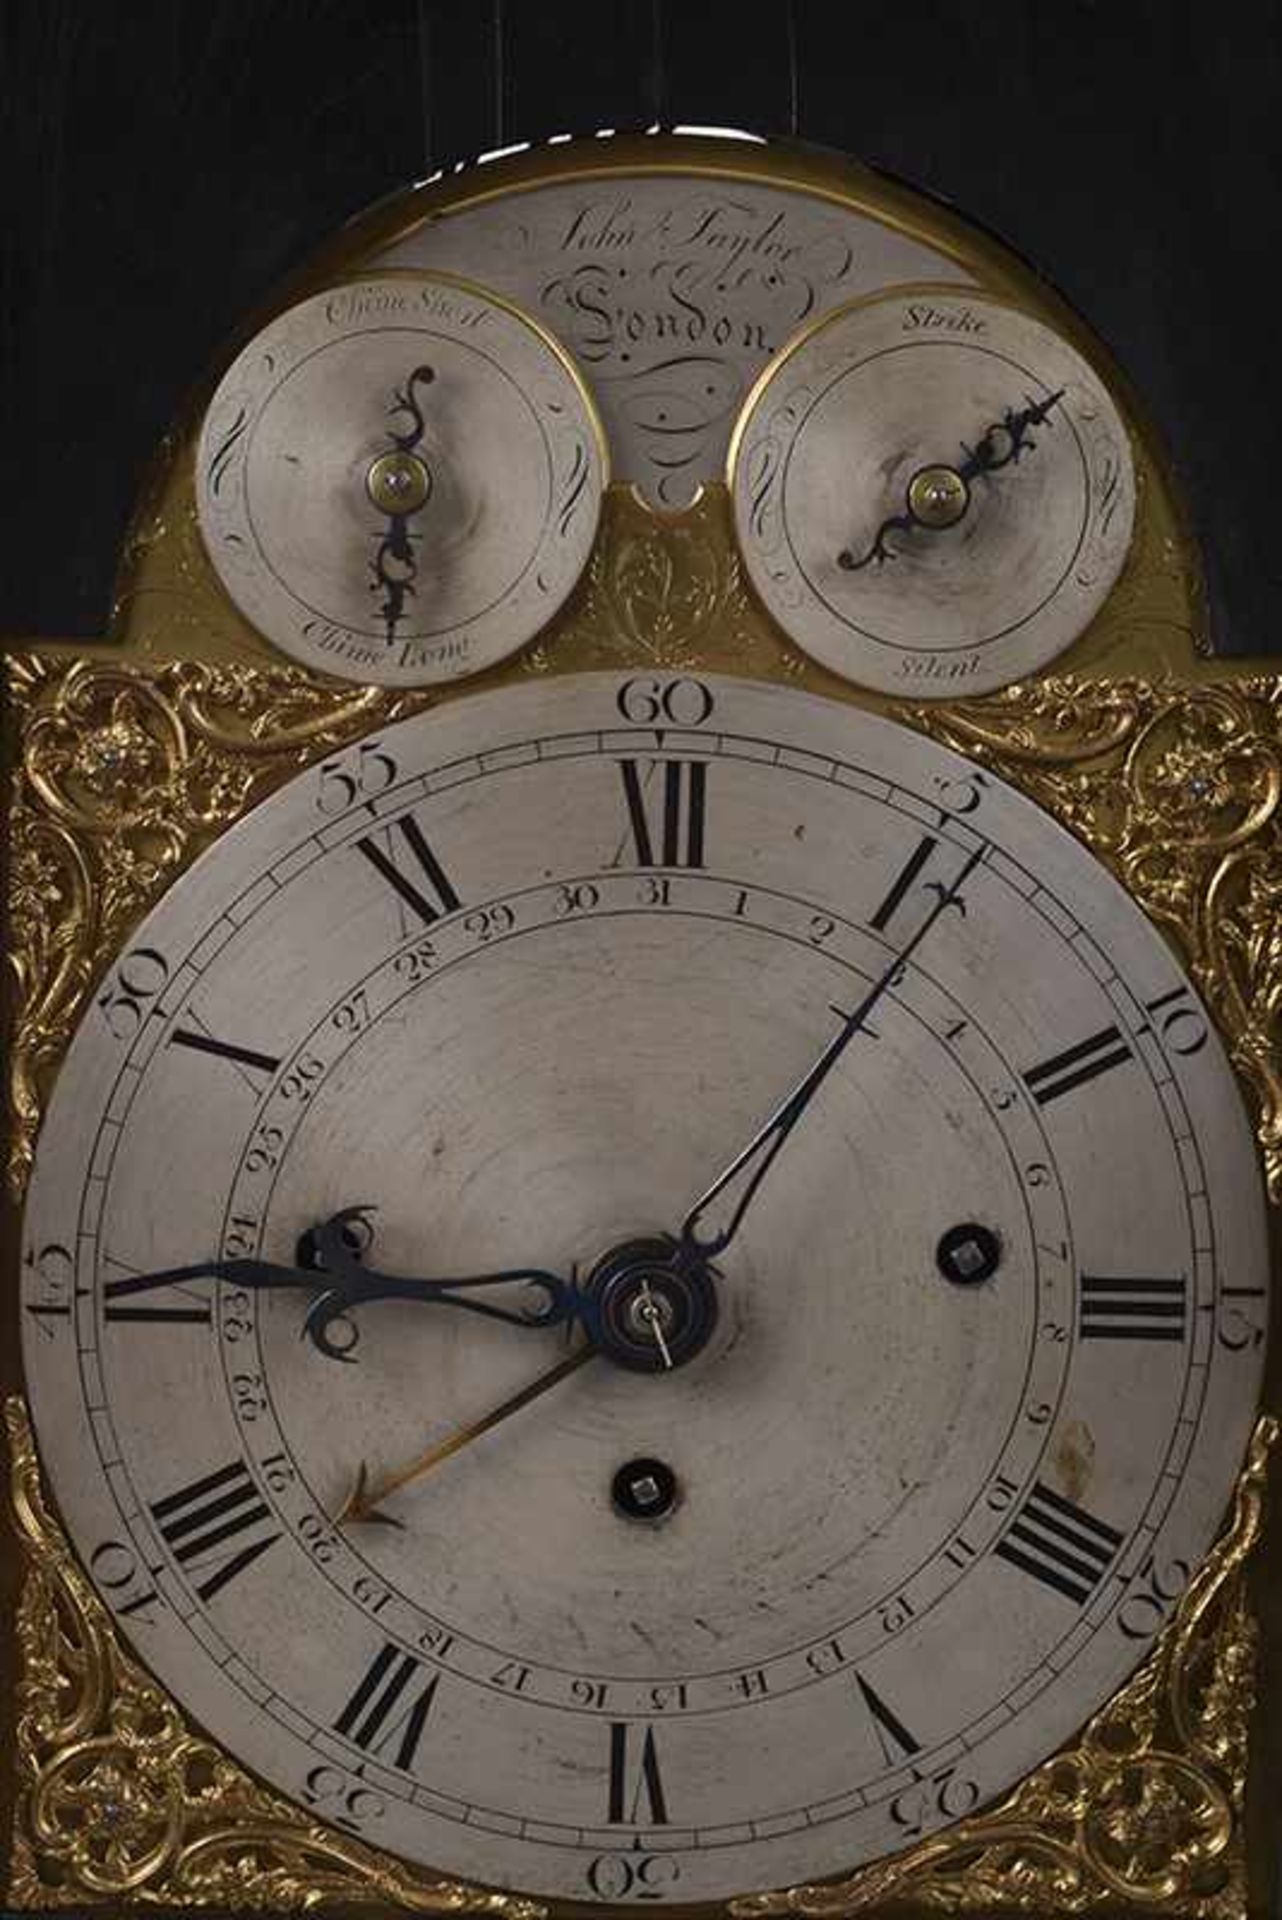 JOHN TAYLOR Englische Braquet Clock, Nussbaum, dunkel gebeizt, rocaillierte Messingverzierungen, - Bild 3 aus 6